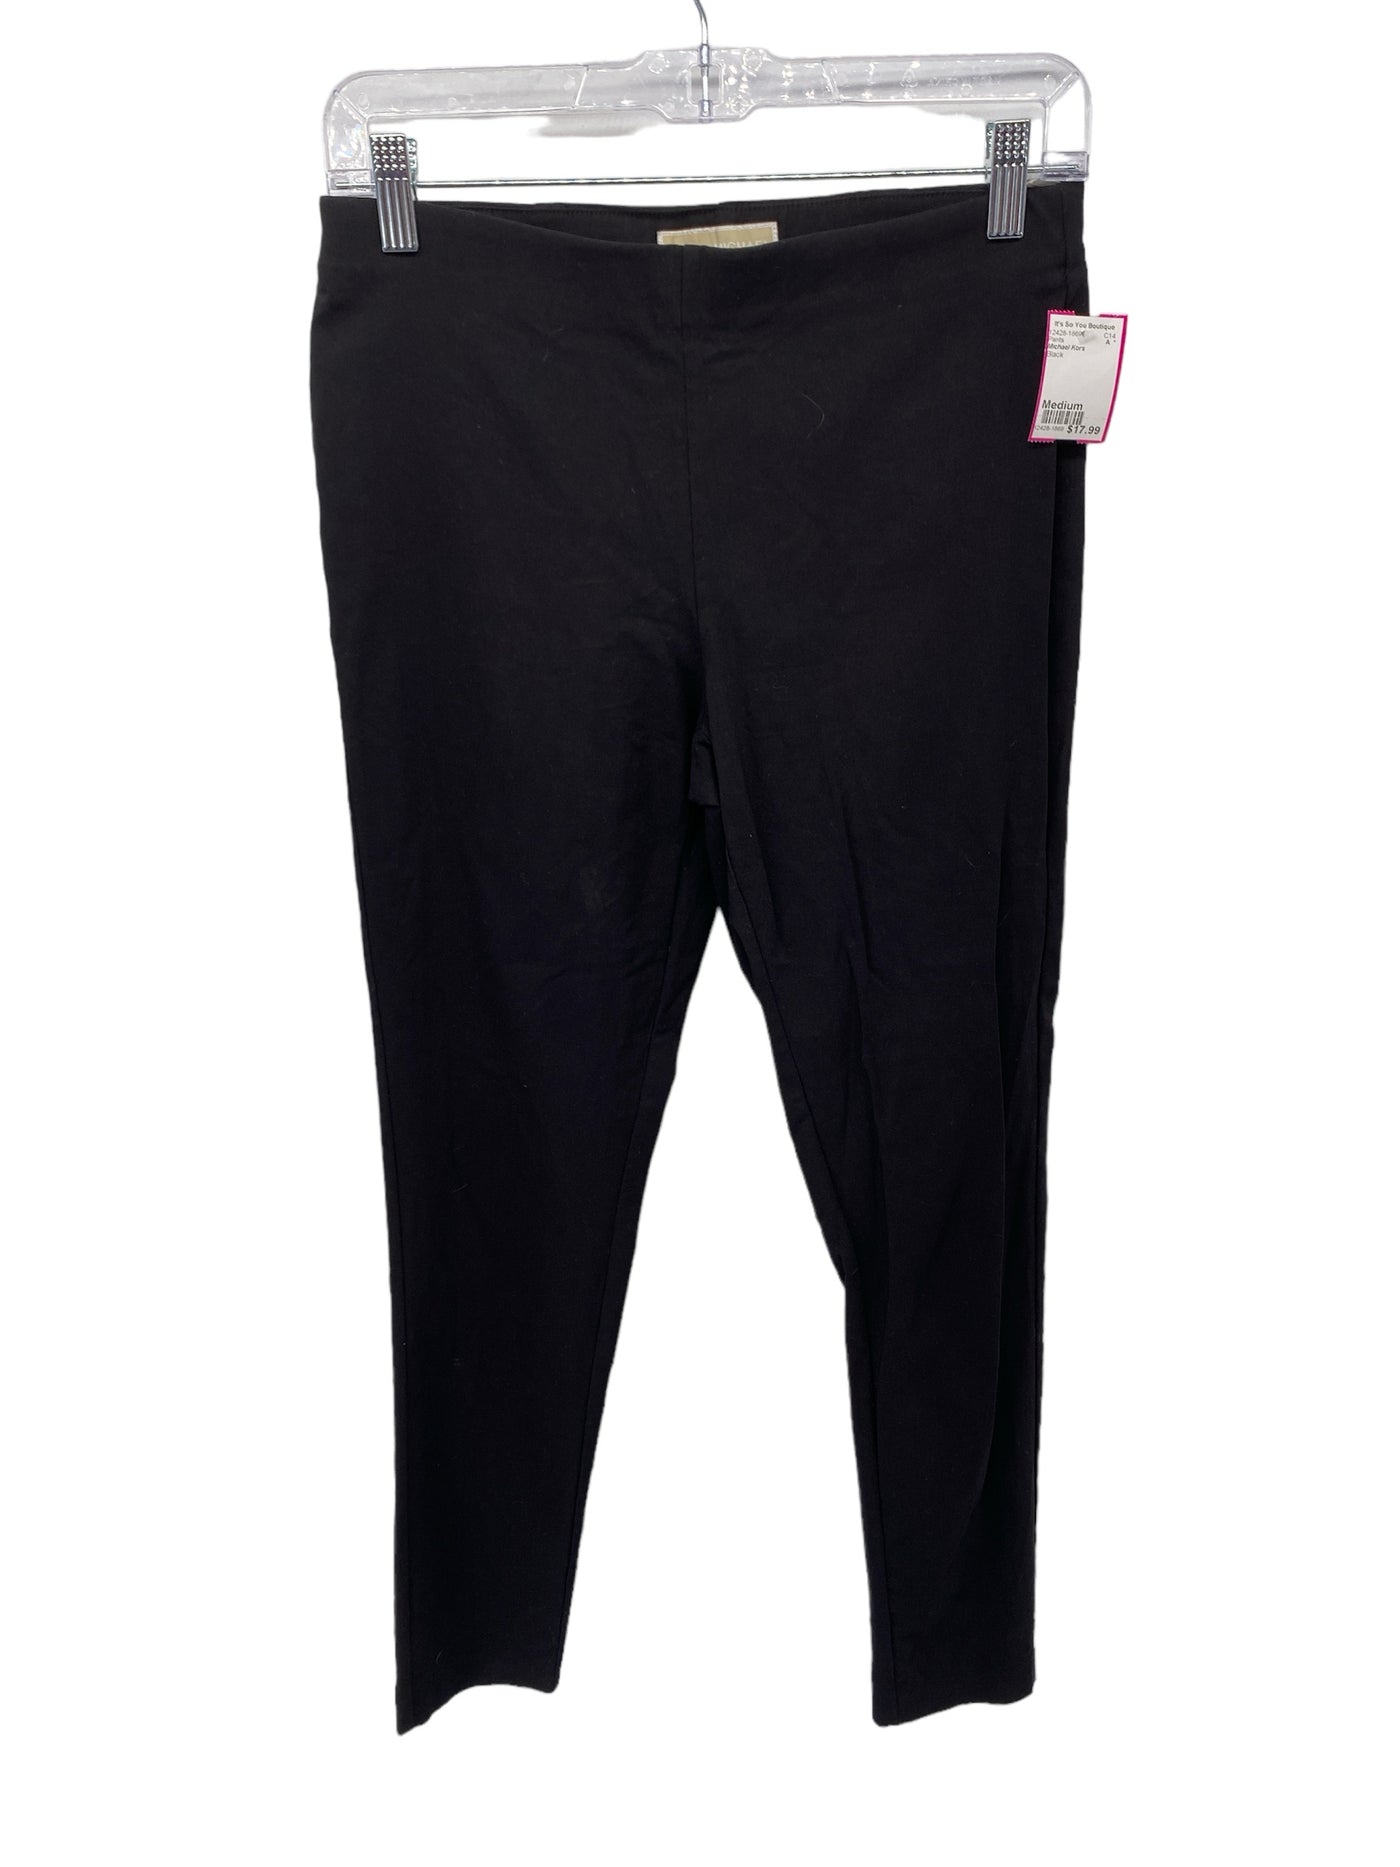 Michael Kors Misses Size Medium Black Pants